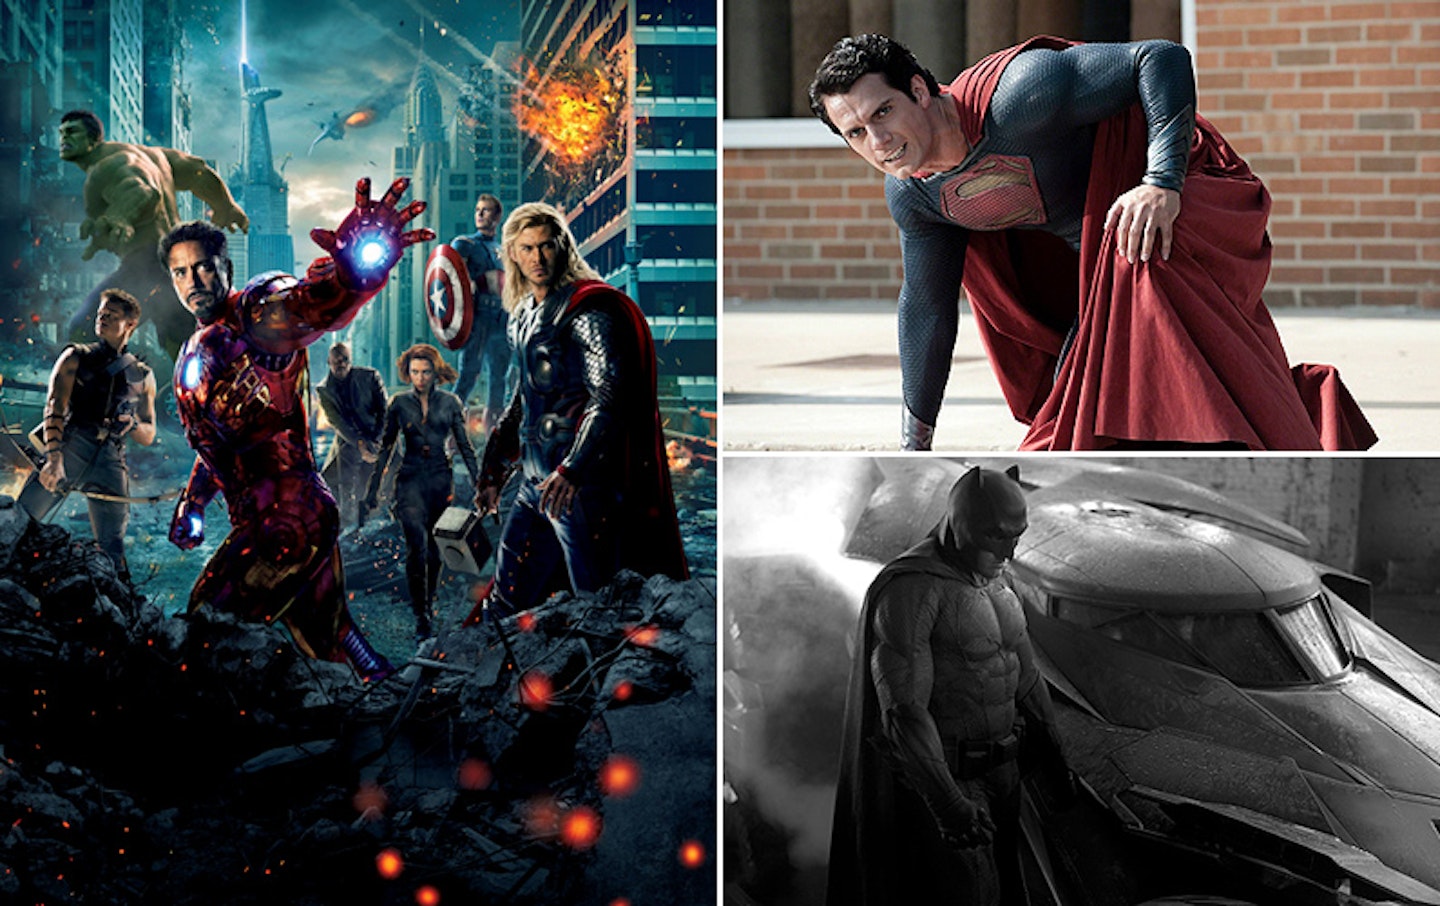 Marvel and DC superhero franchises